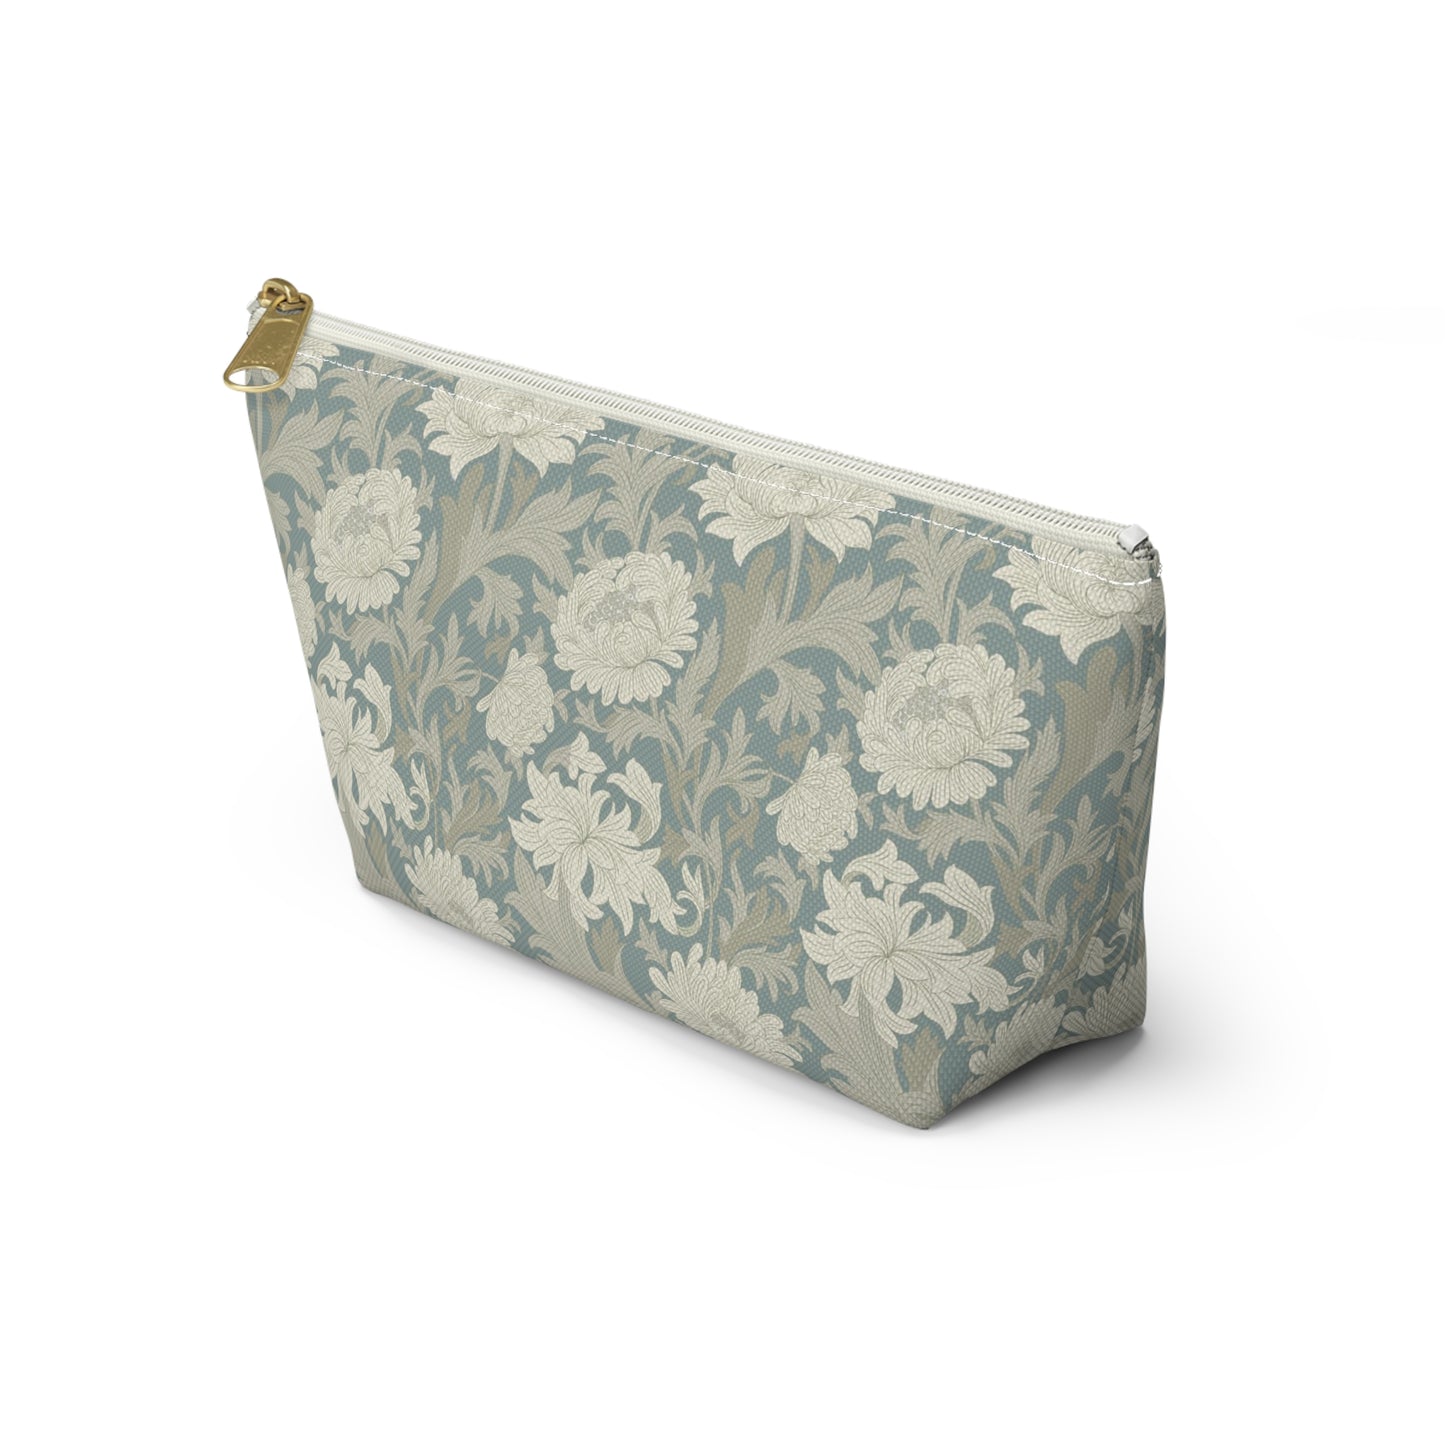 William Morris Misty Grey Chrysanthemum Toiletries Bag